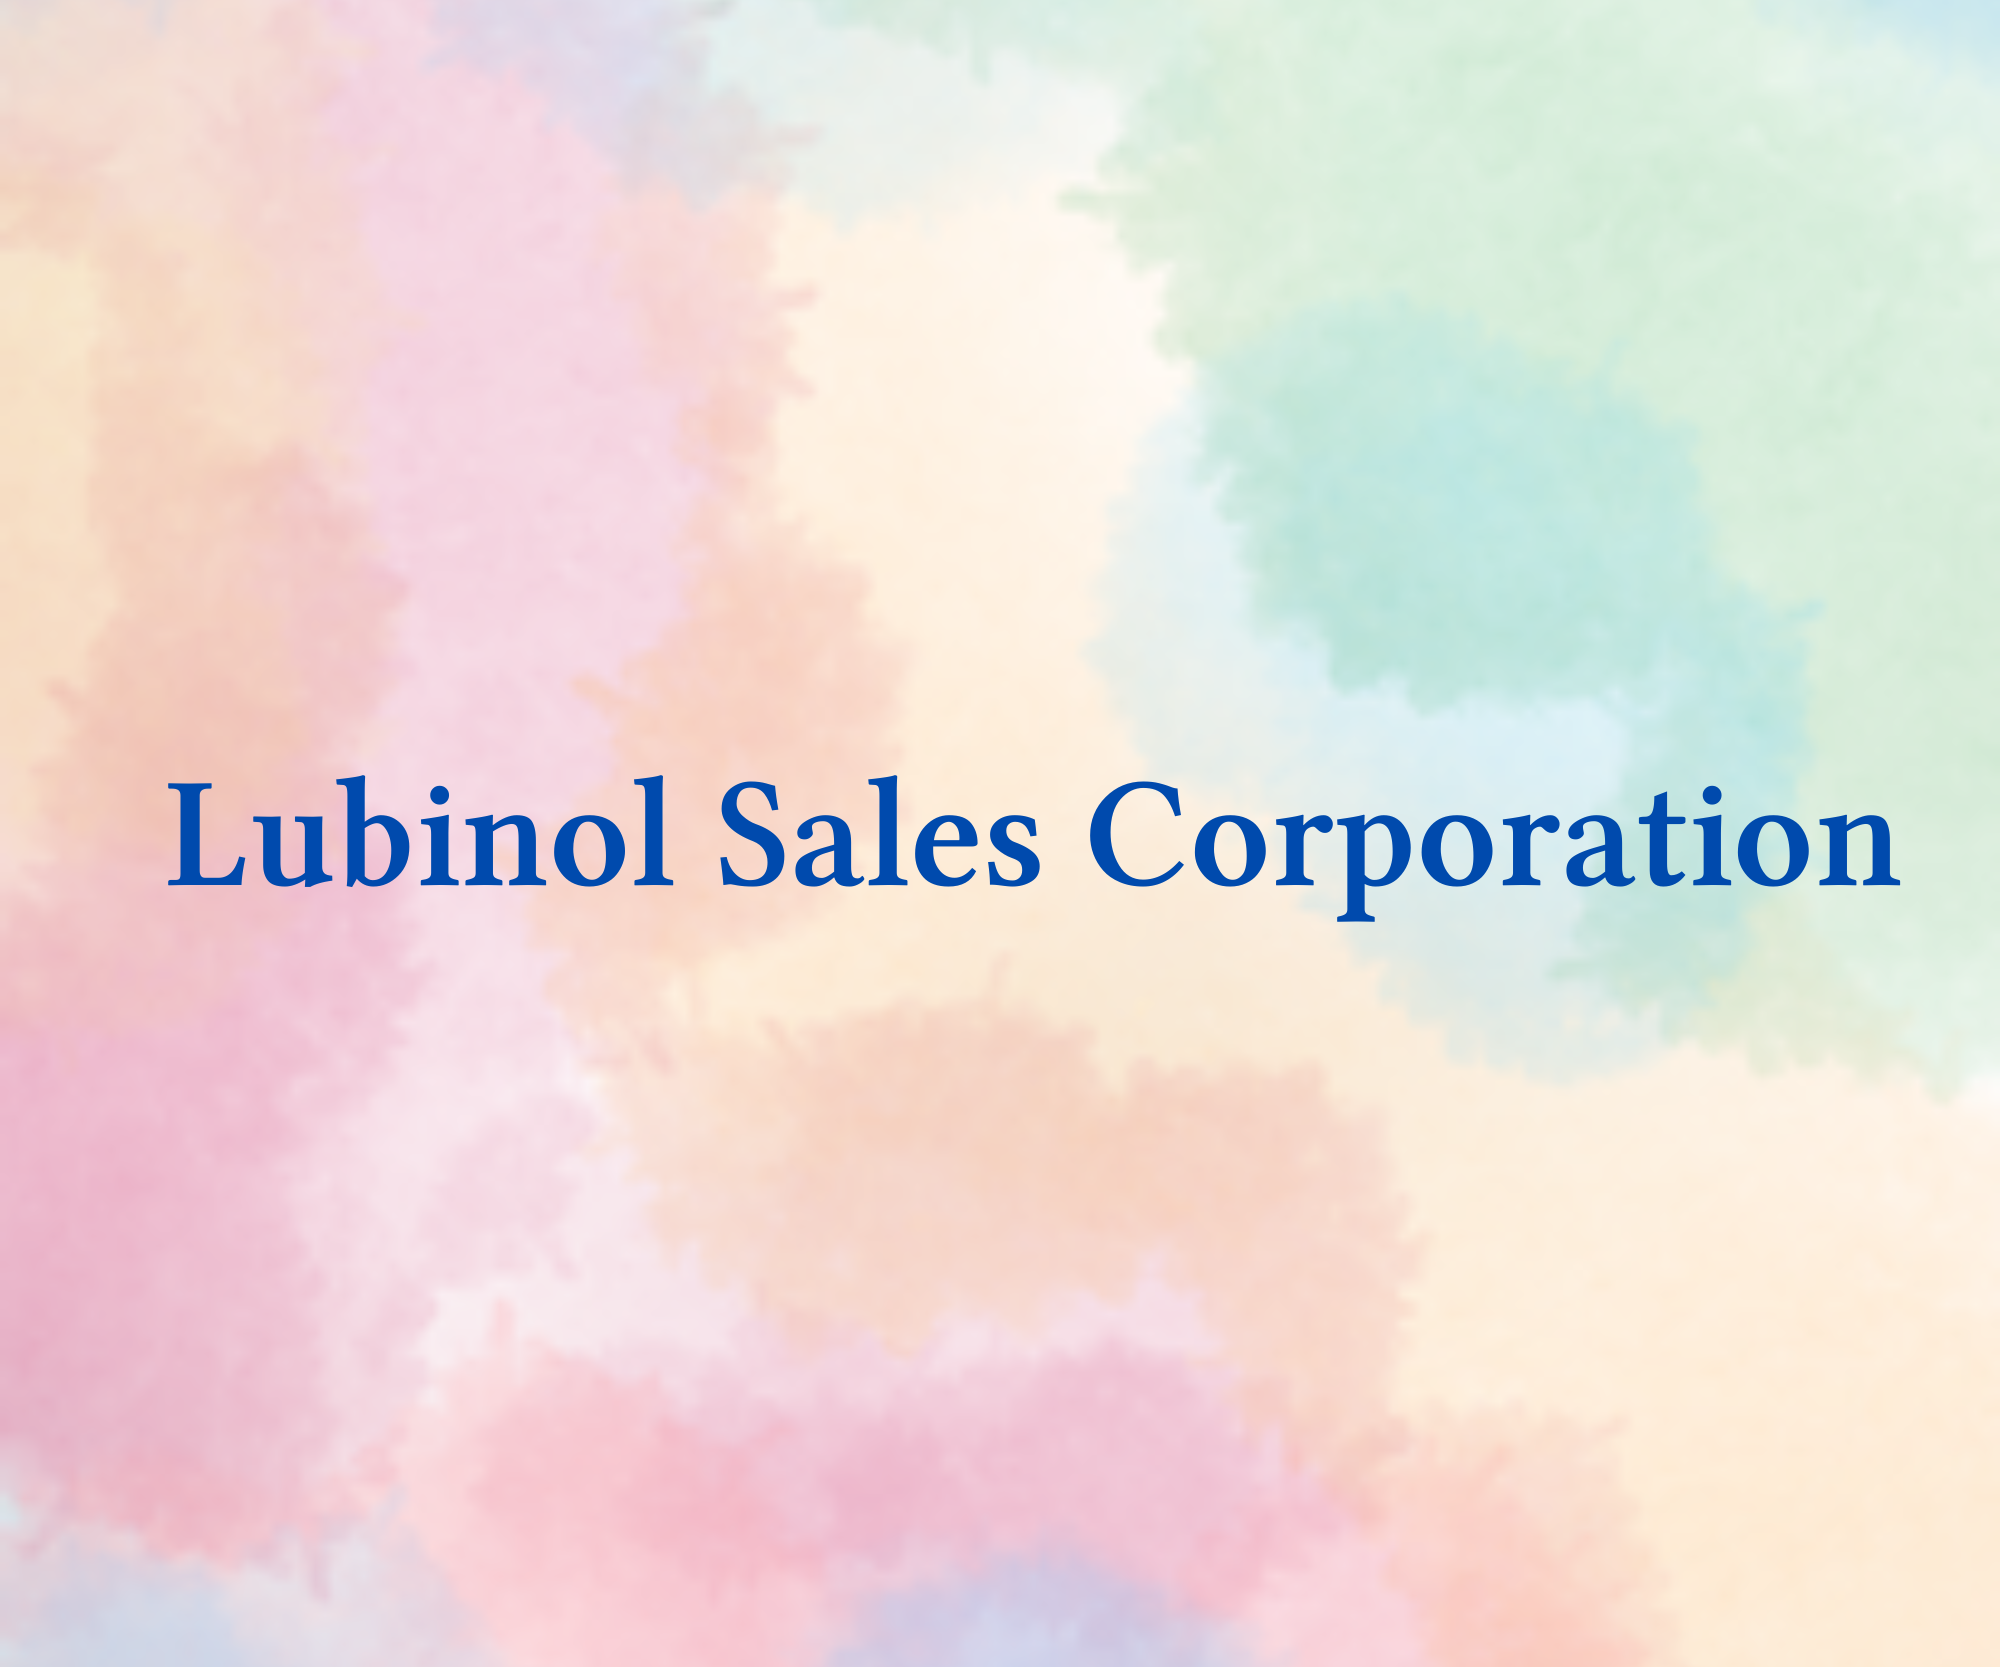  Lubinol Sales Corporation pune, 